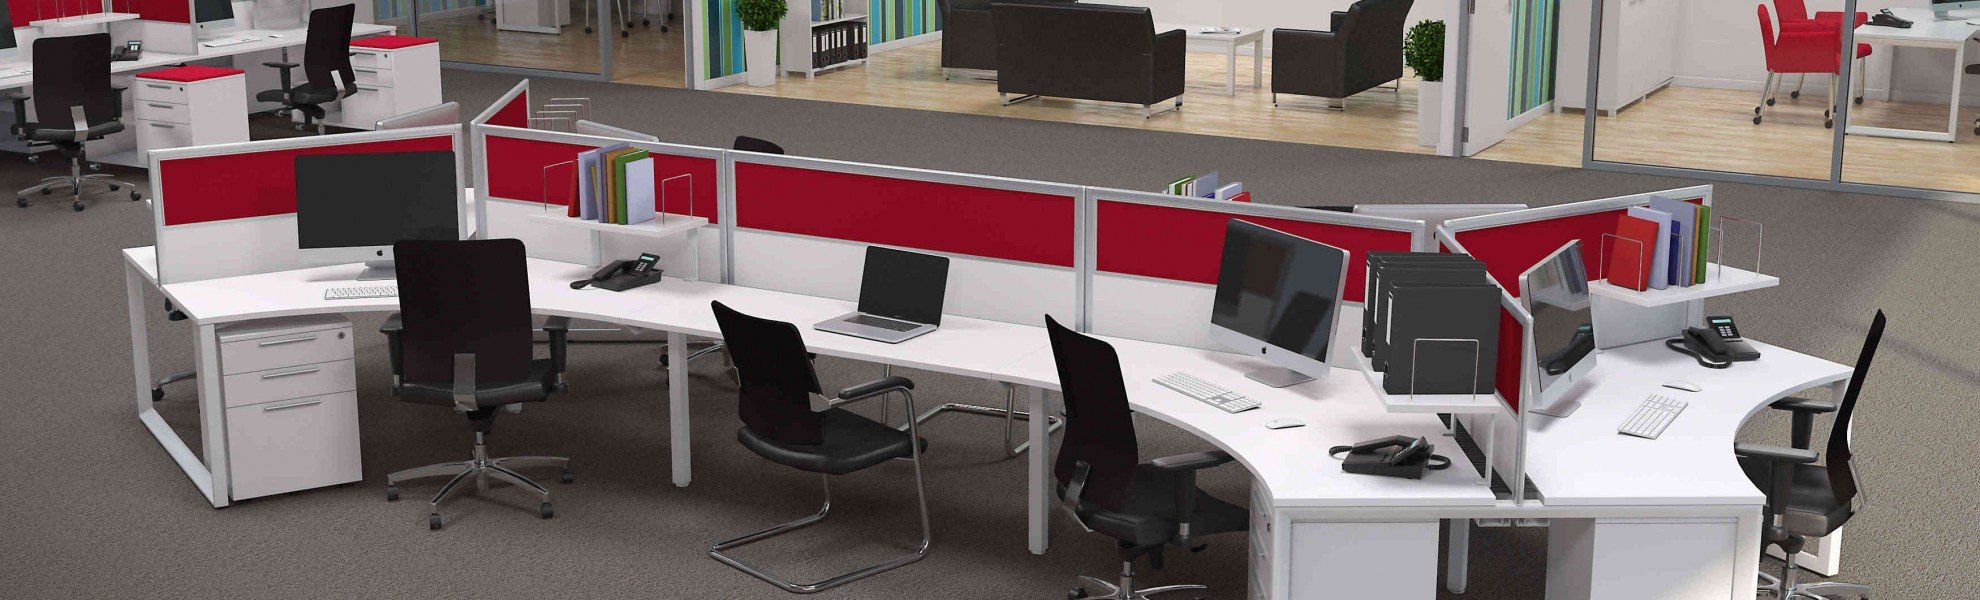 Office Furnitures, Chairs & Desks Sydney | IDEAL Furniture